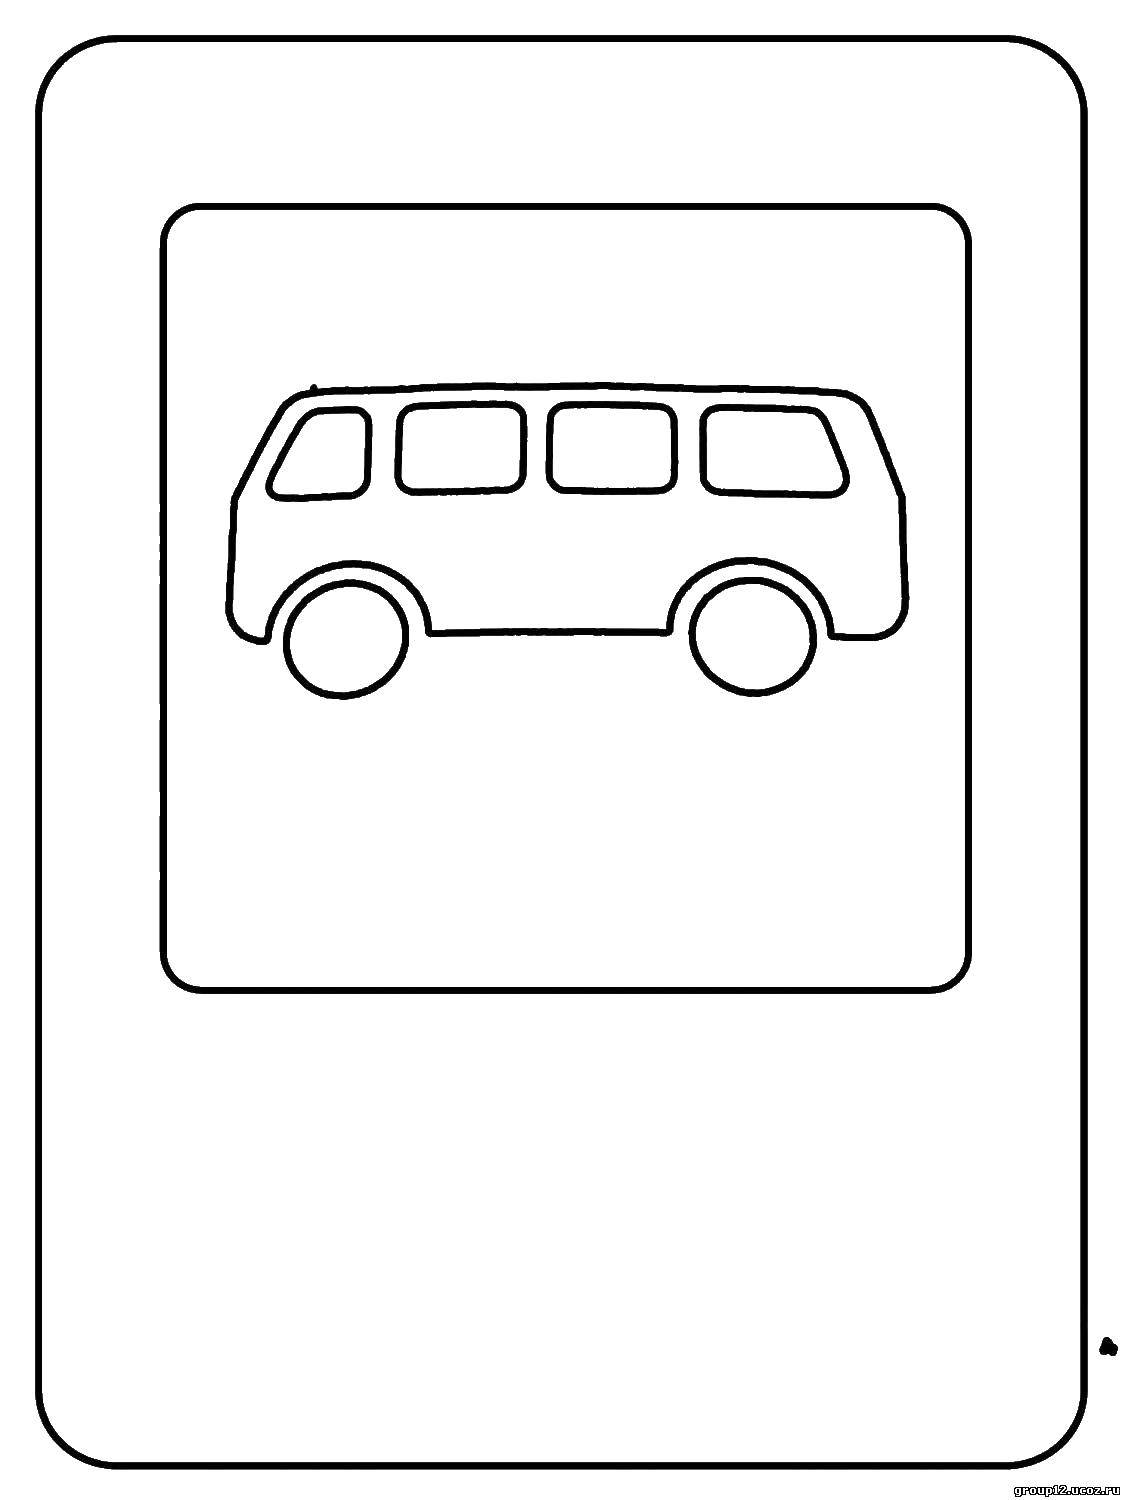 Название: Раскраска Автобус. Категория: светофор. Теги: автобус.